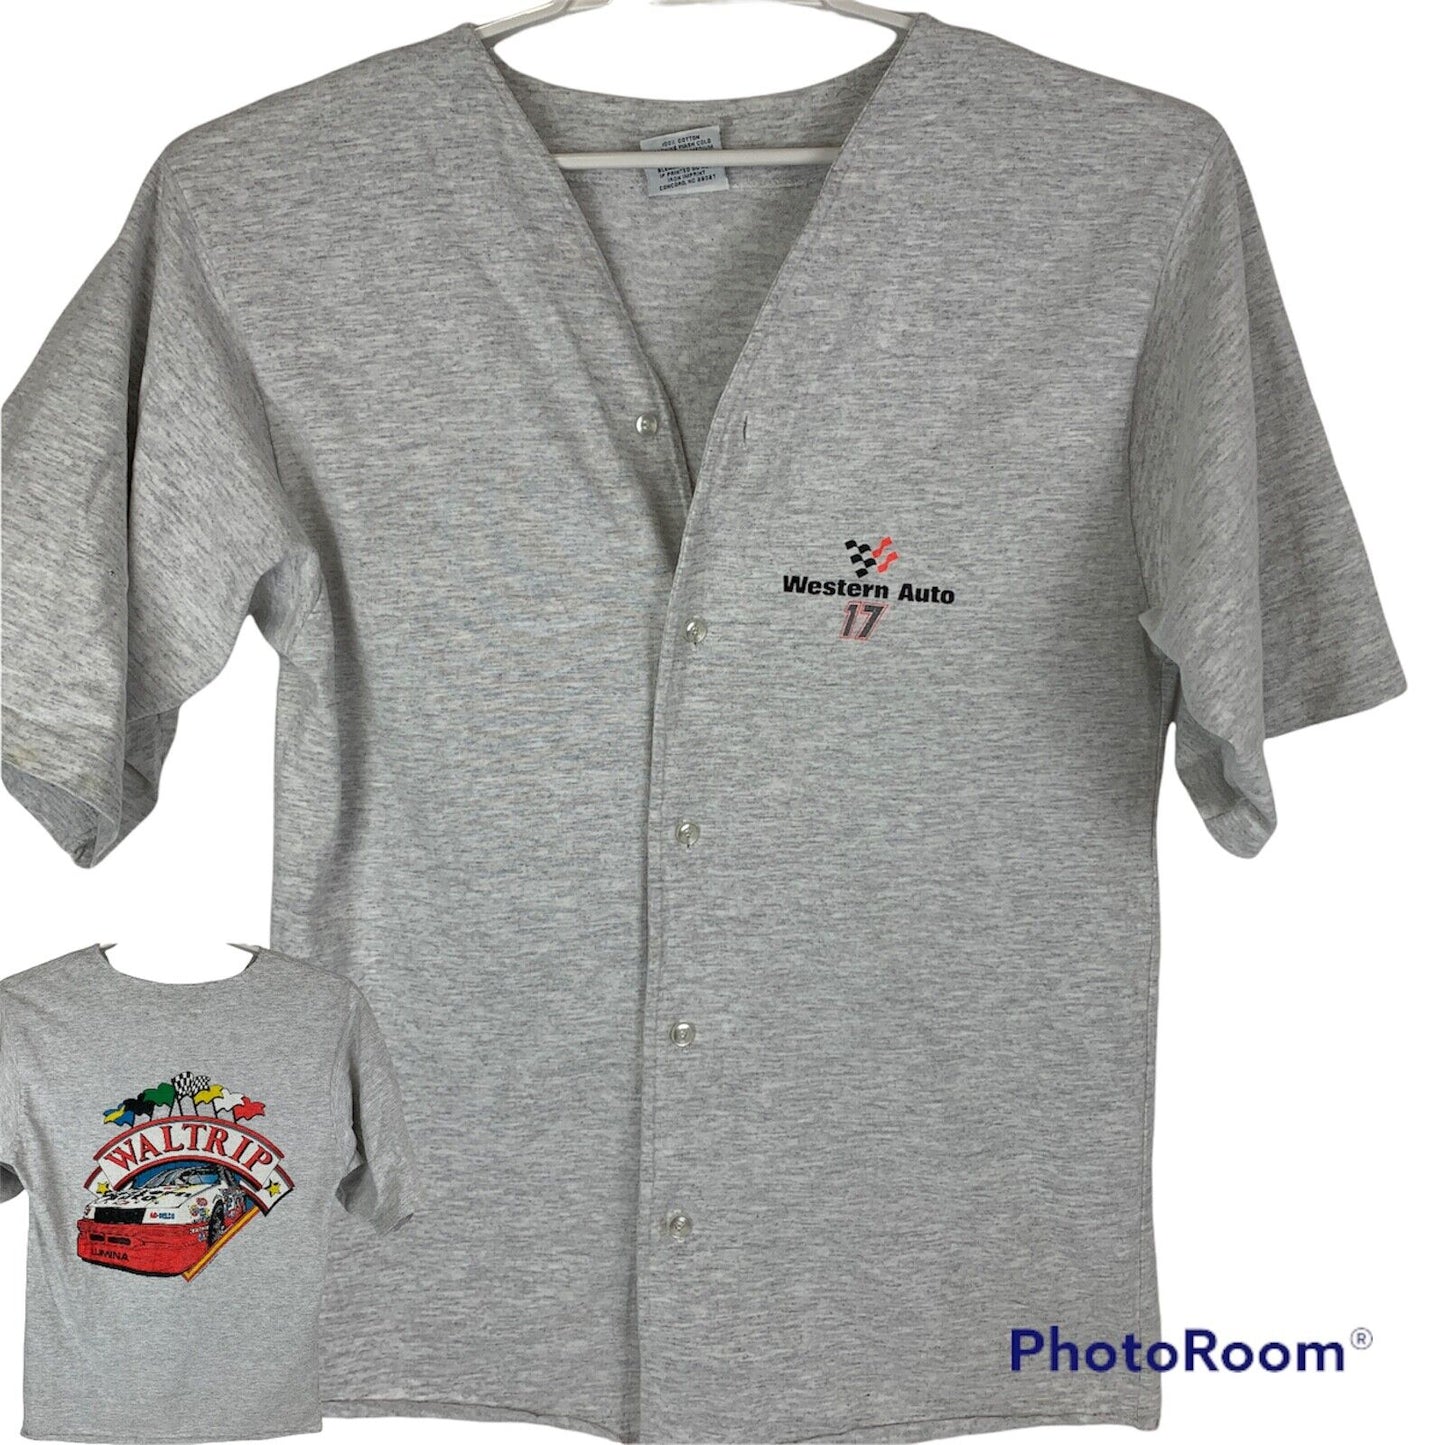 Darrell Waltrip NASCAR Vintage 90s T Shirt 17 Western Auto Chevrolet USA Medium